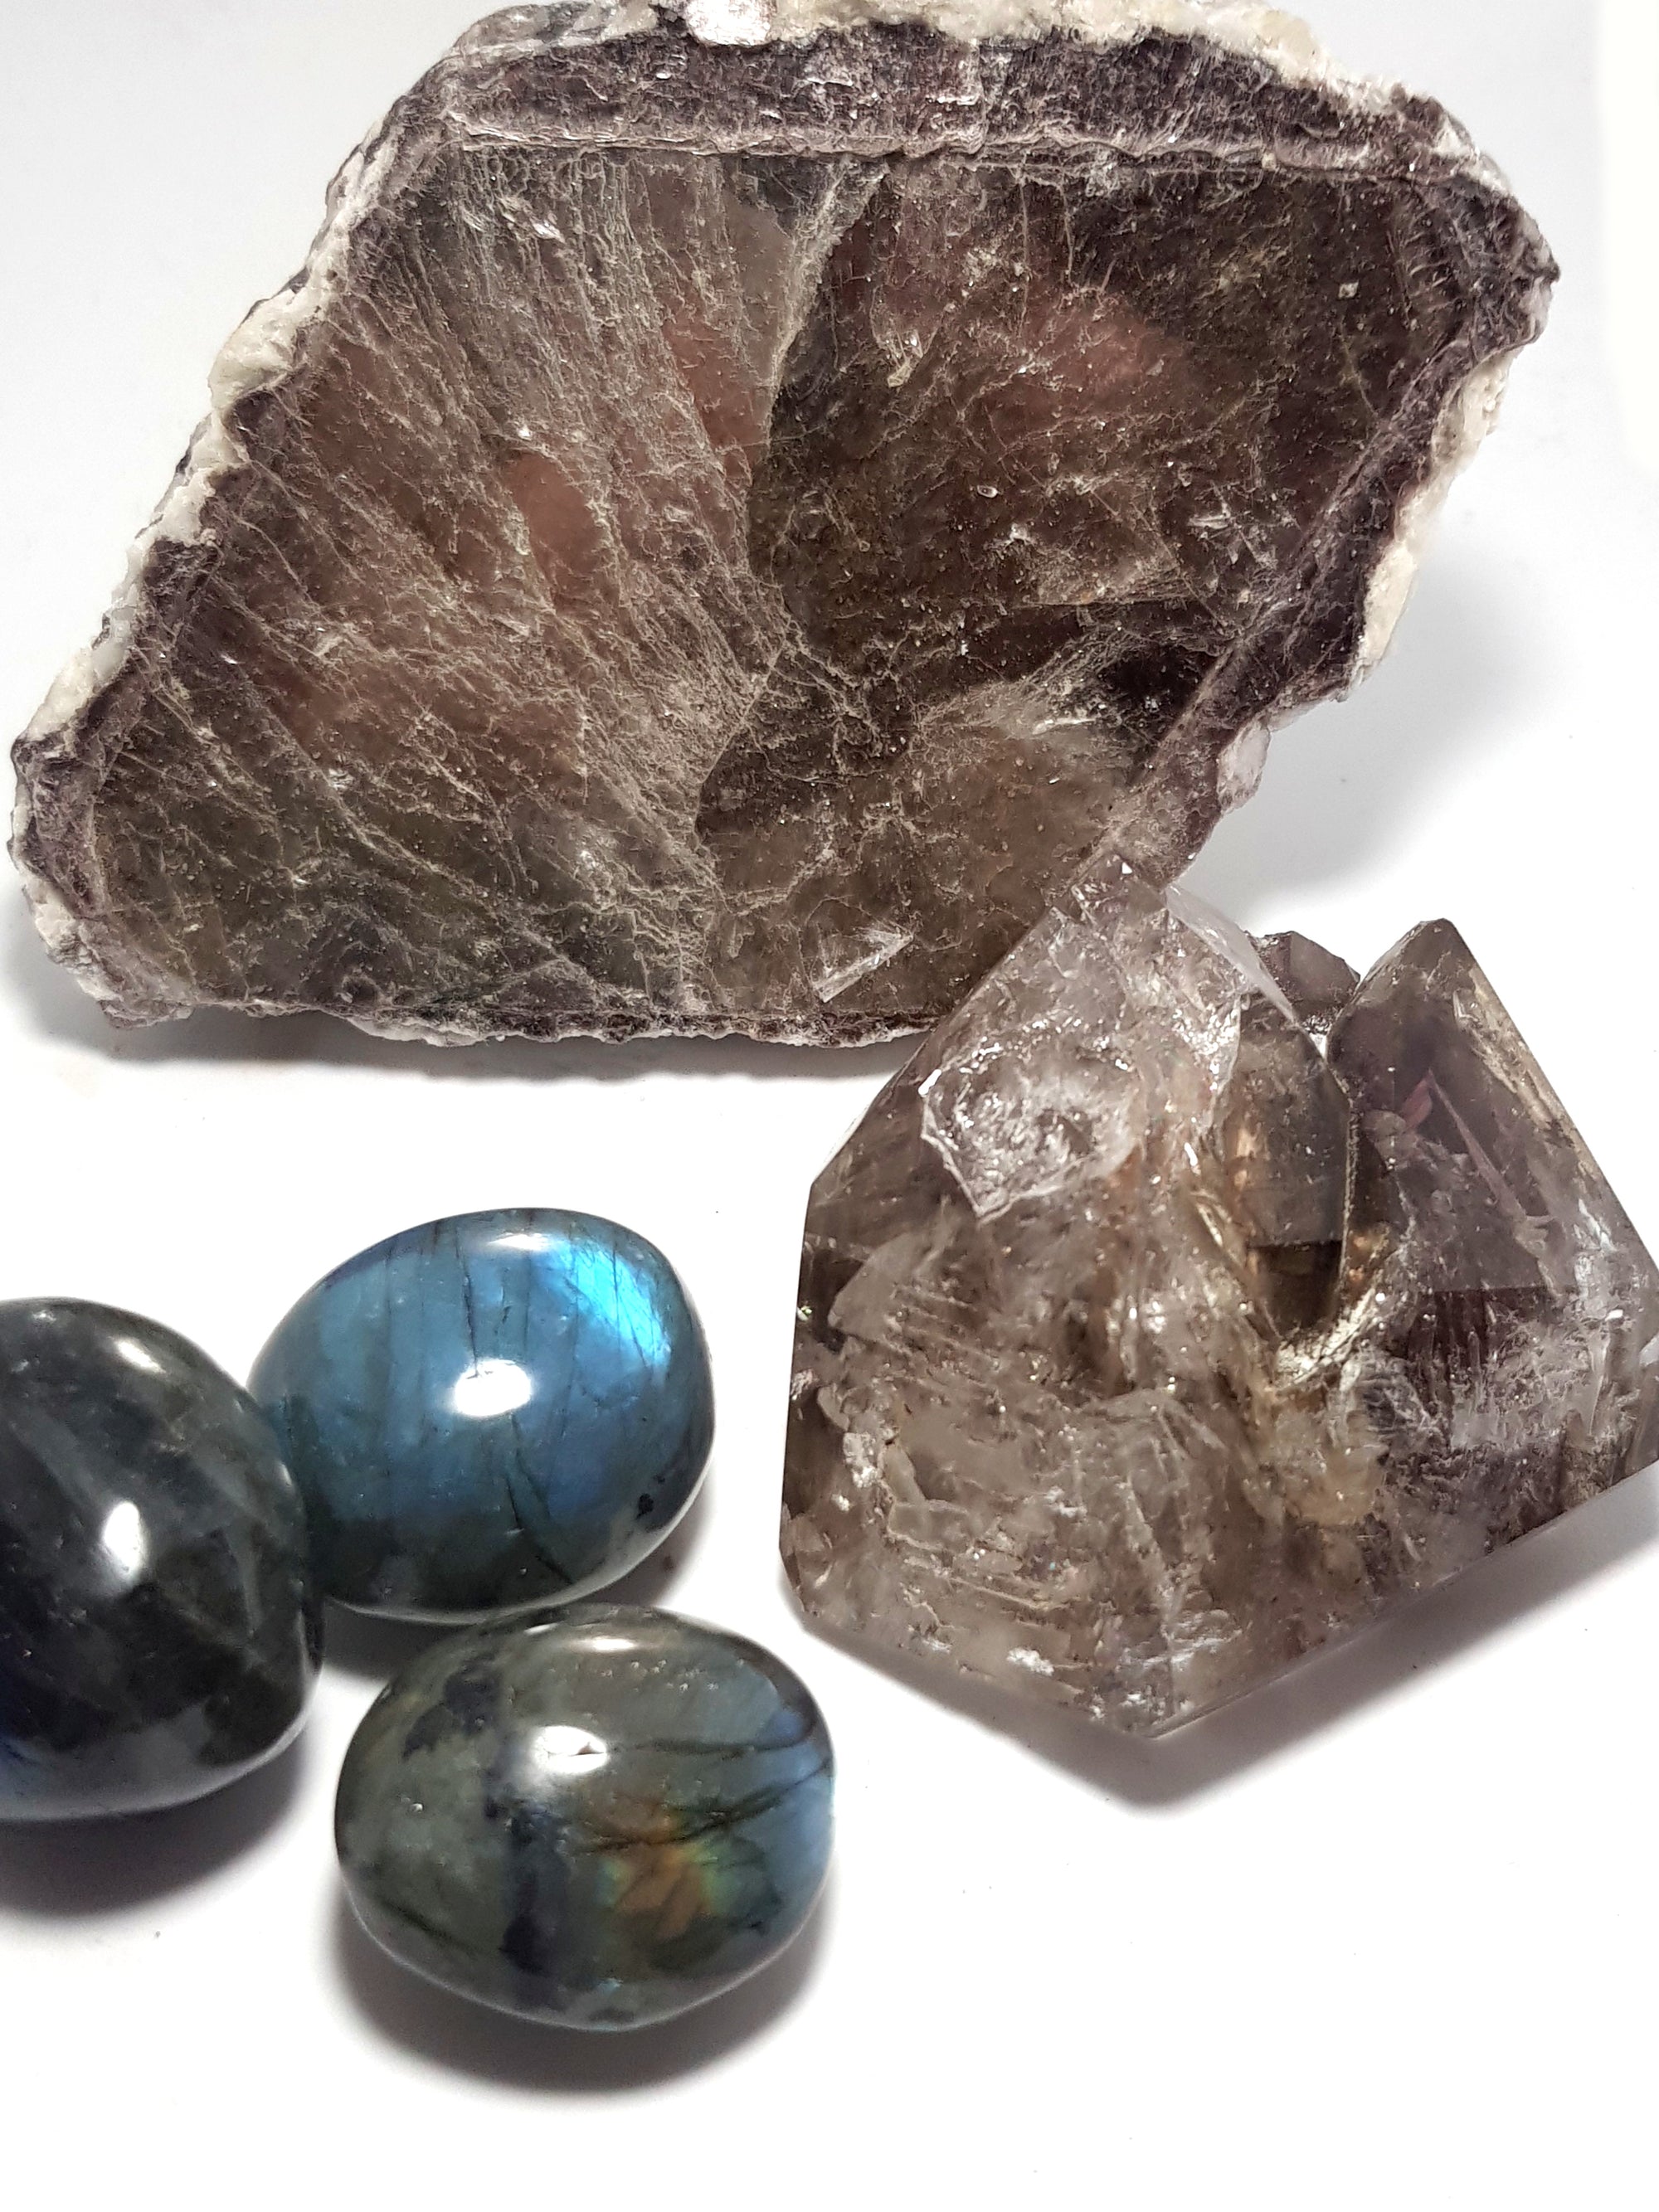 a zoned crystal of lepidolite mica, 3 polished pebbles of labradorite, quartz 